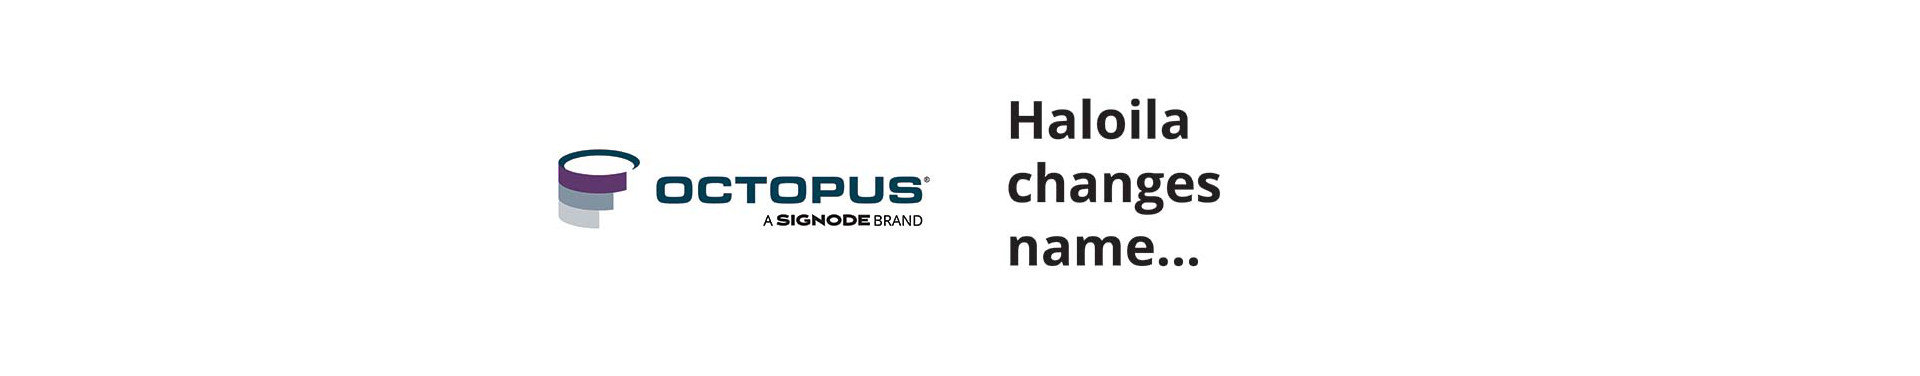 Haloila changes name